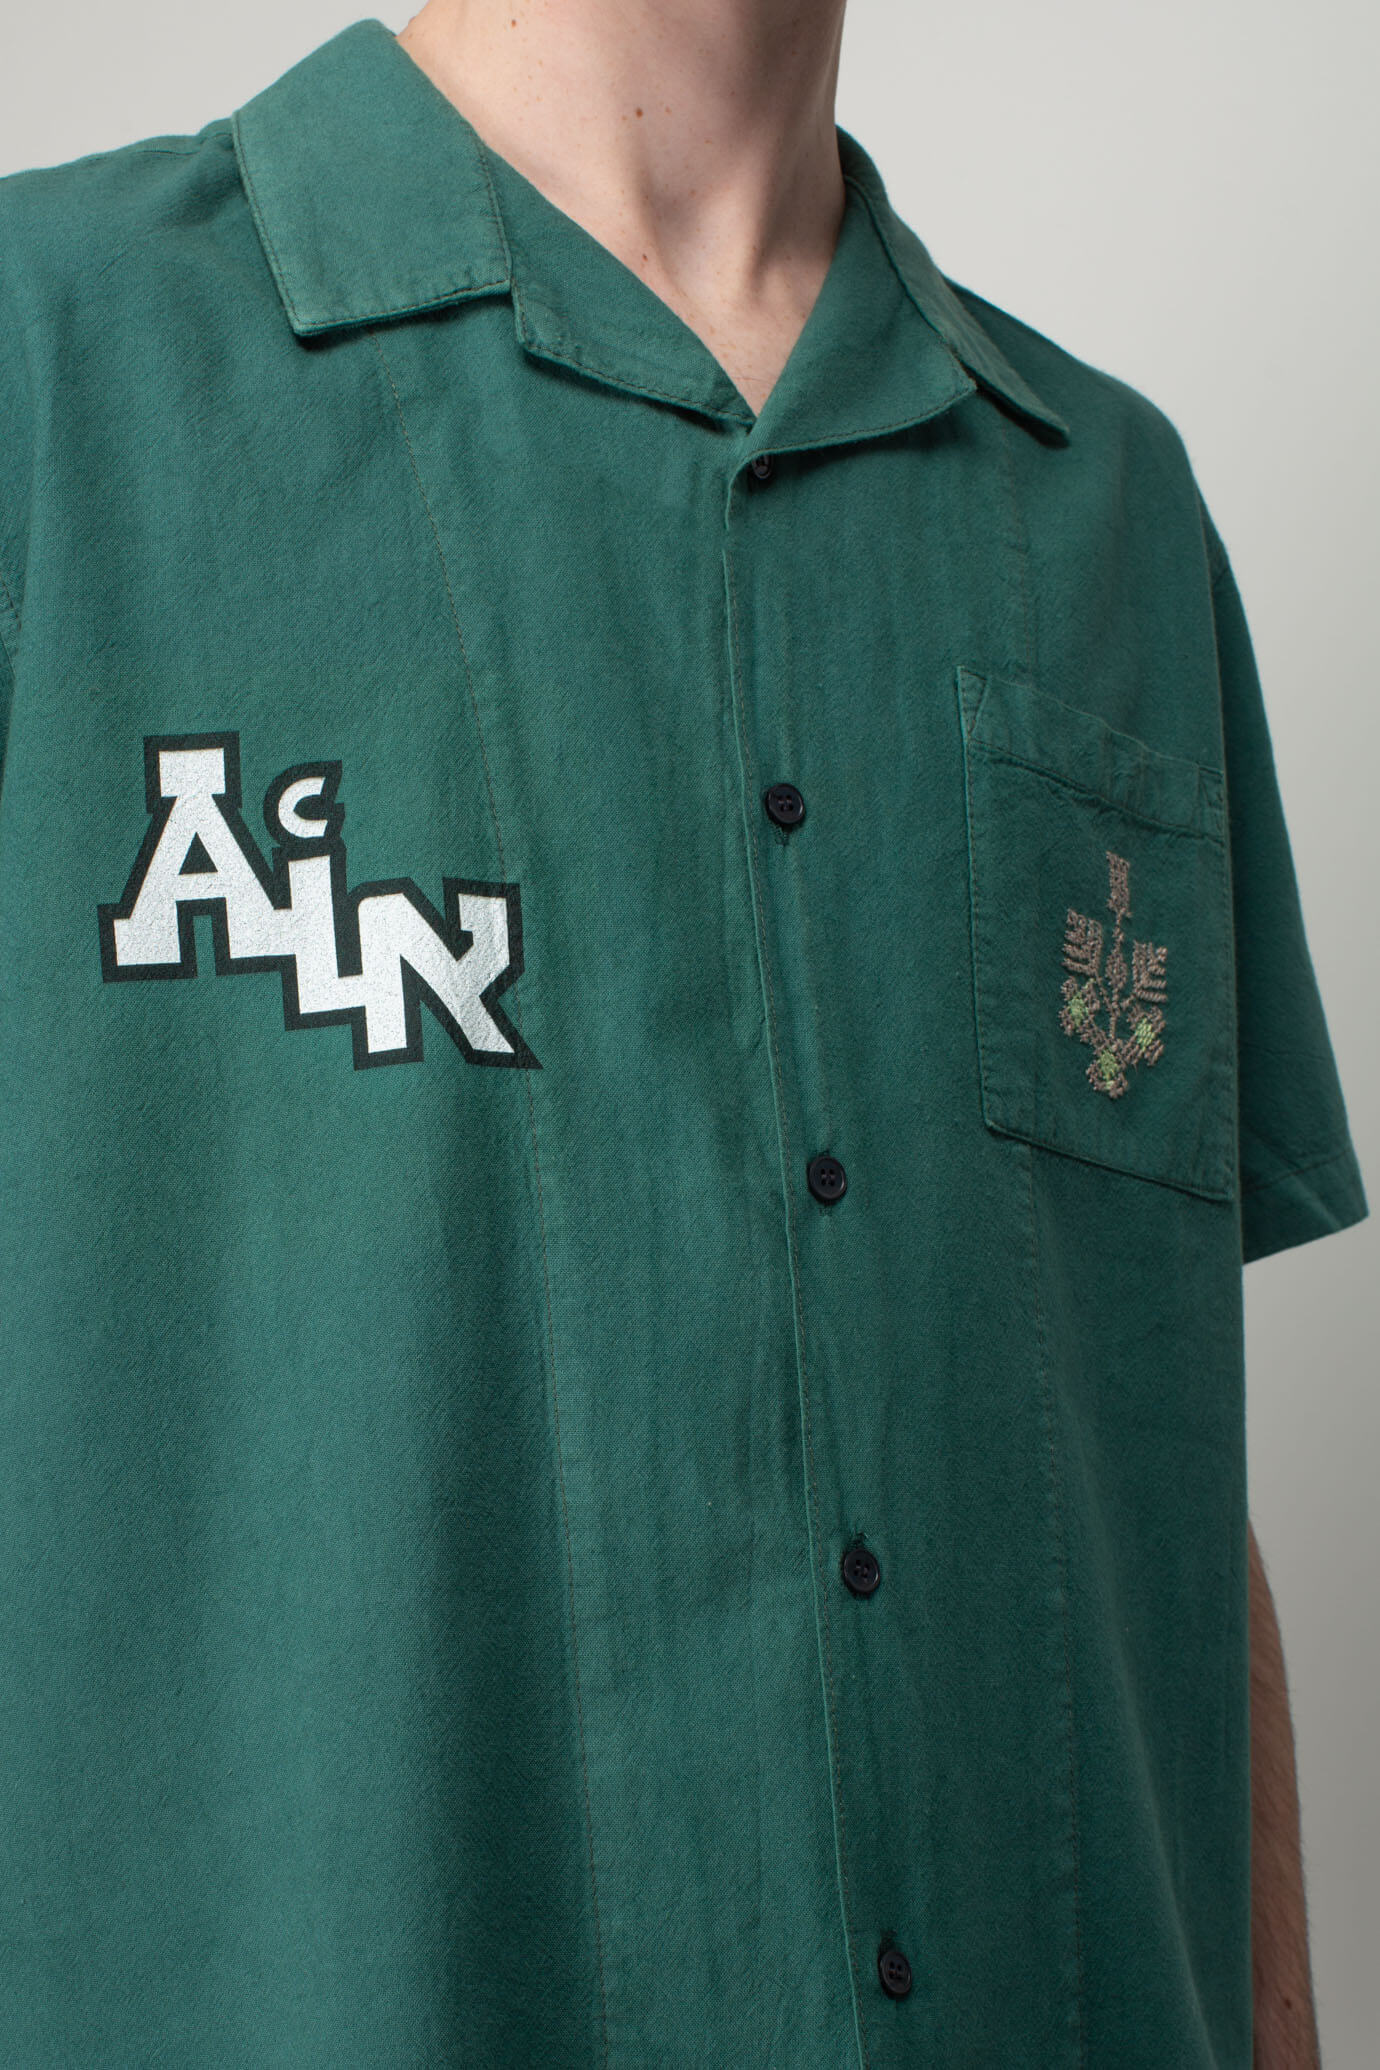 Adish x The Inoue Brothers SS Shirt